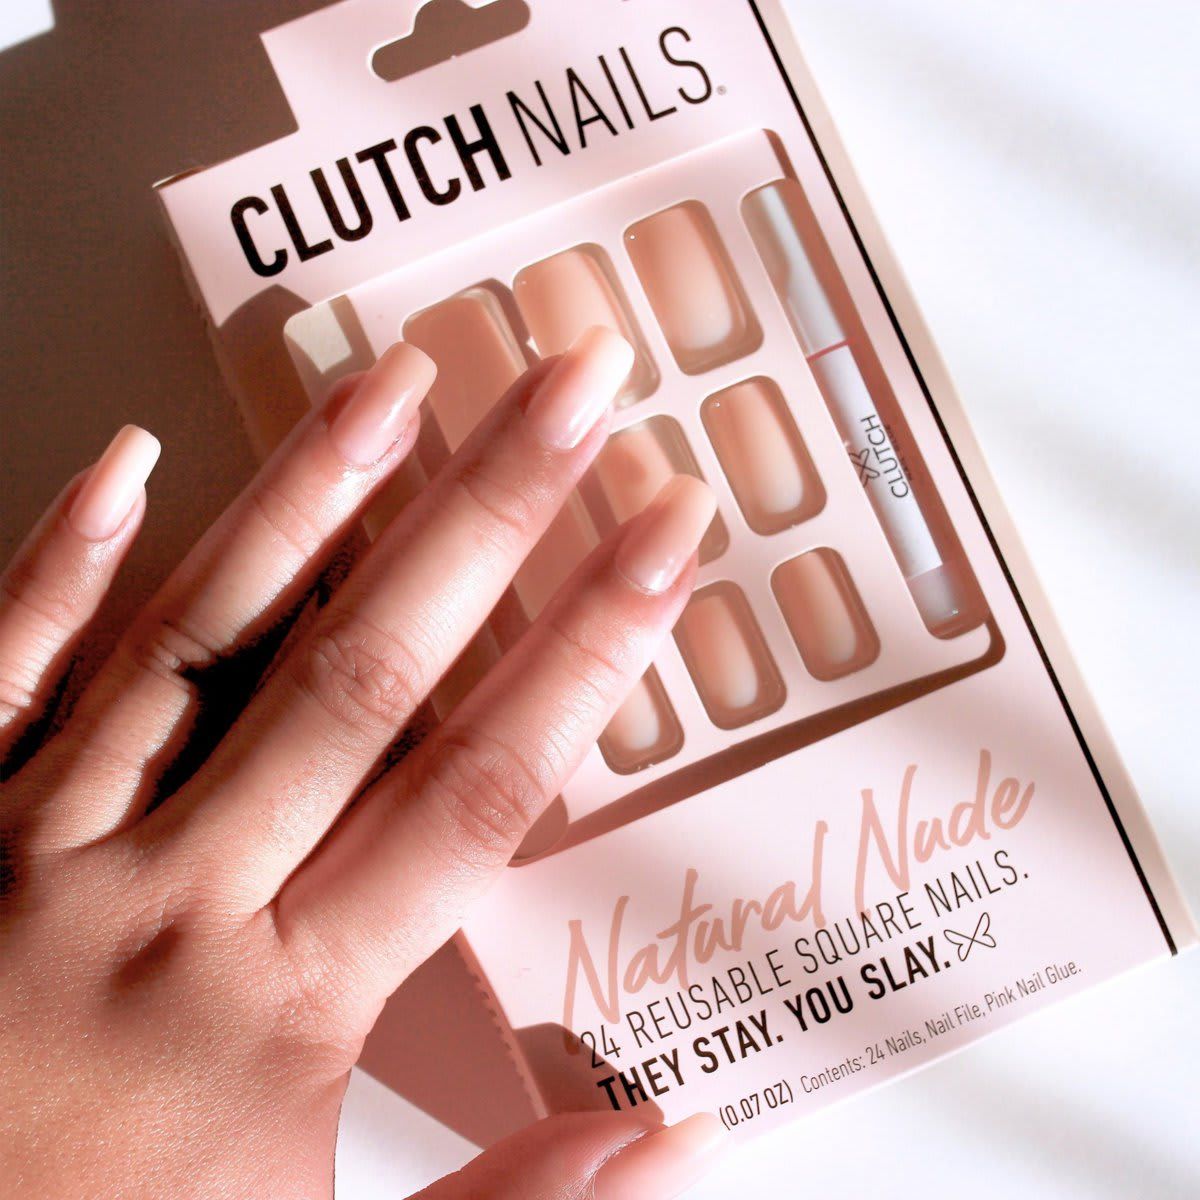 Clutch Nails